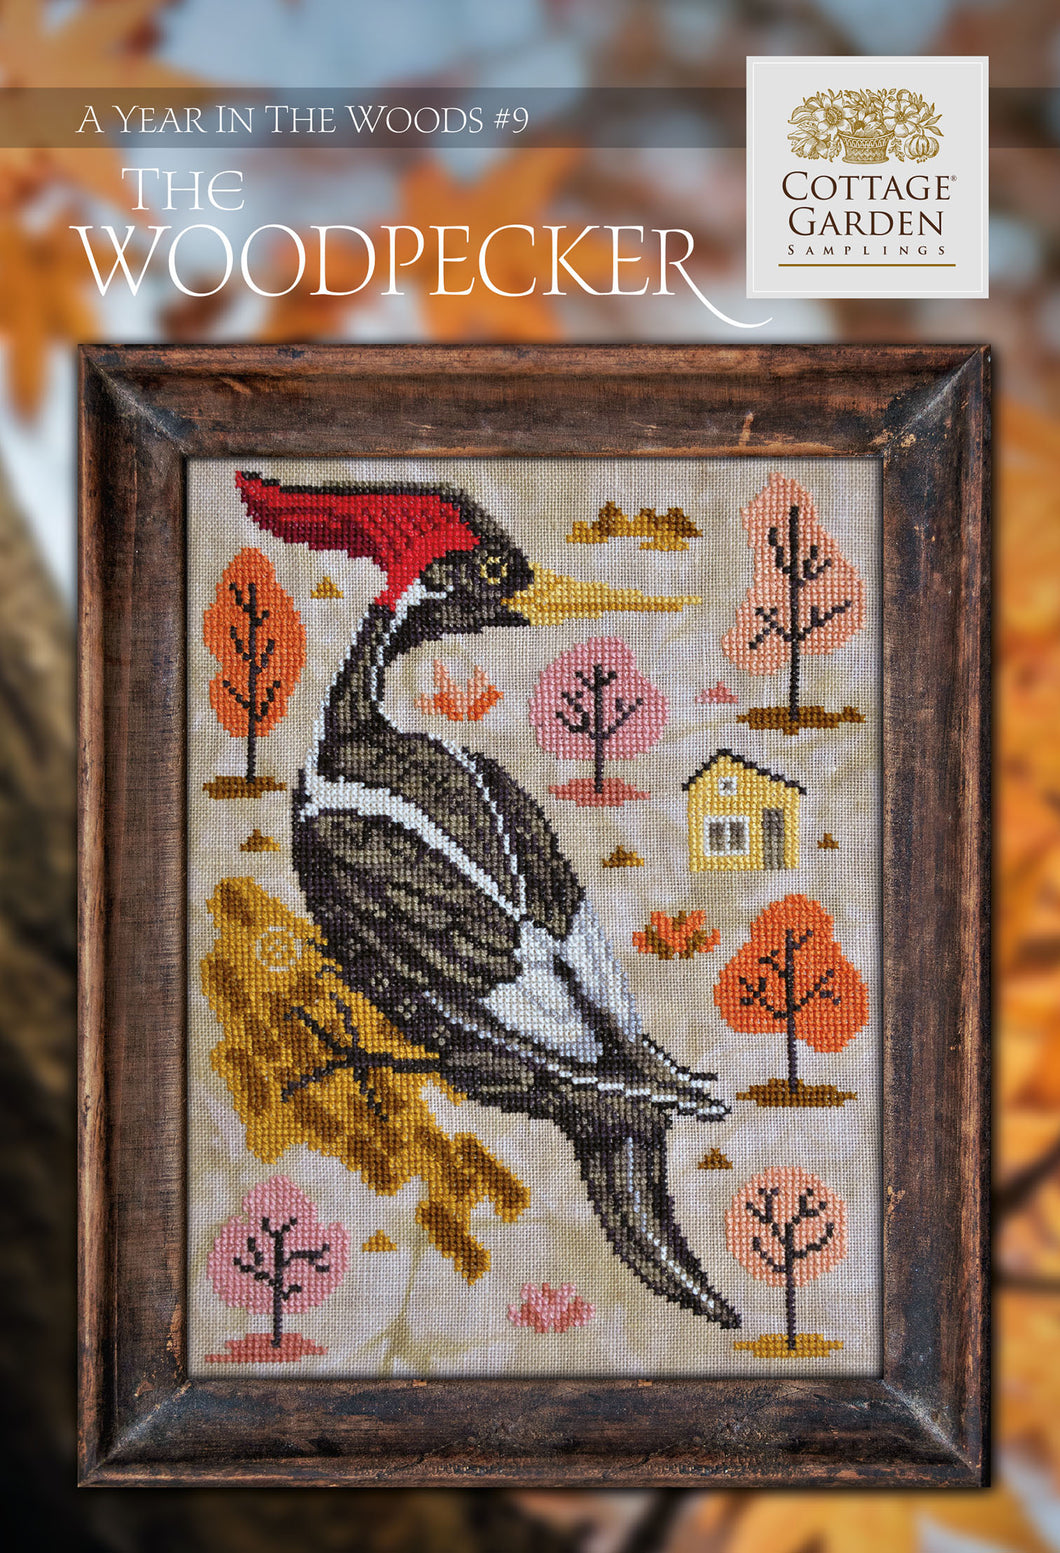 The Woodpecker by Cottage Garden Samplings